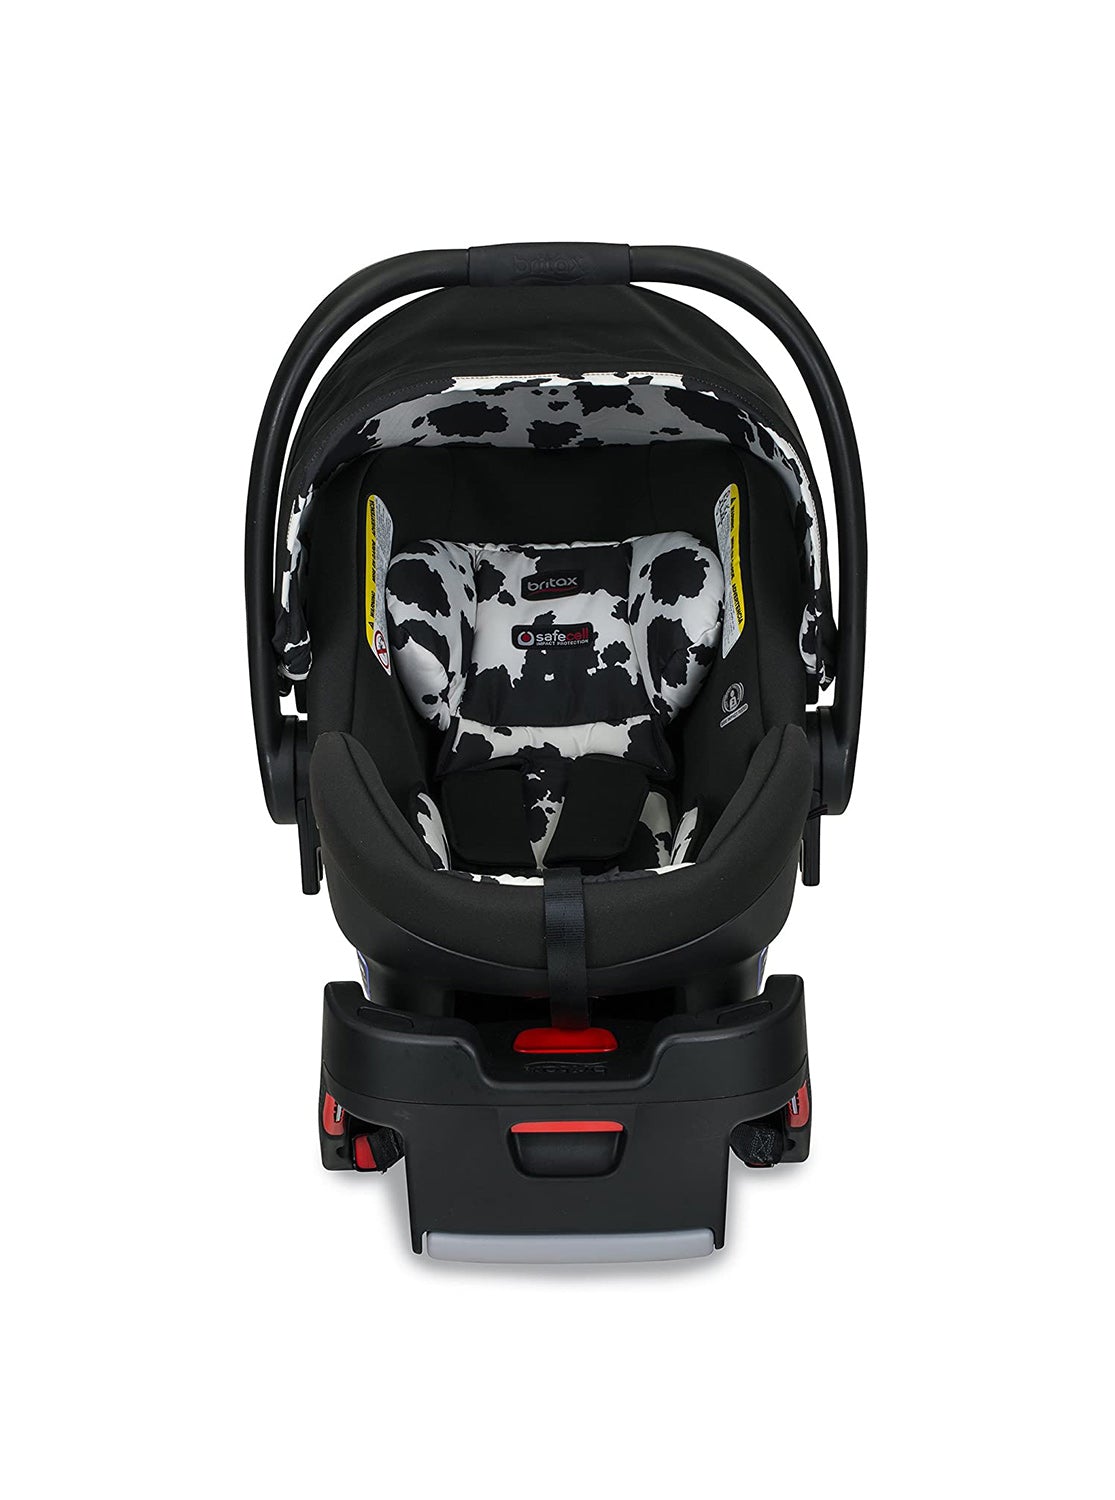 BRITAX B-Safe Ultra Infant Car Seat - ANB Baby -$100 - $300